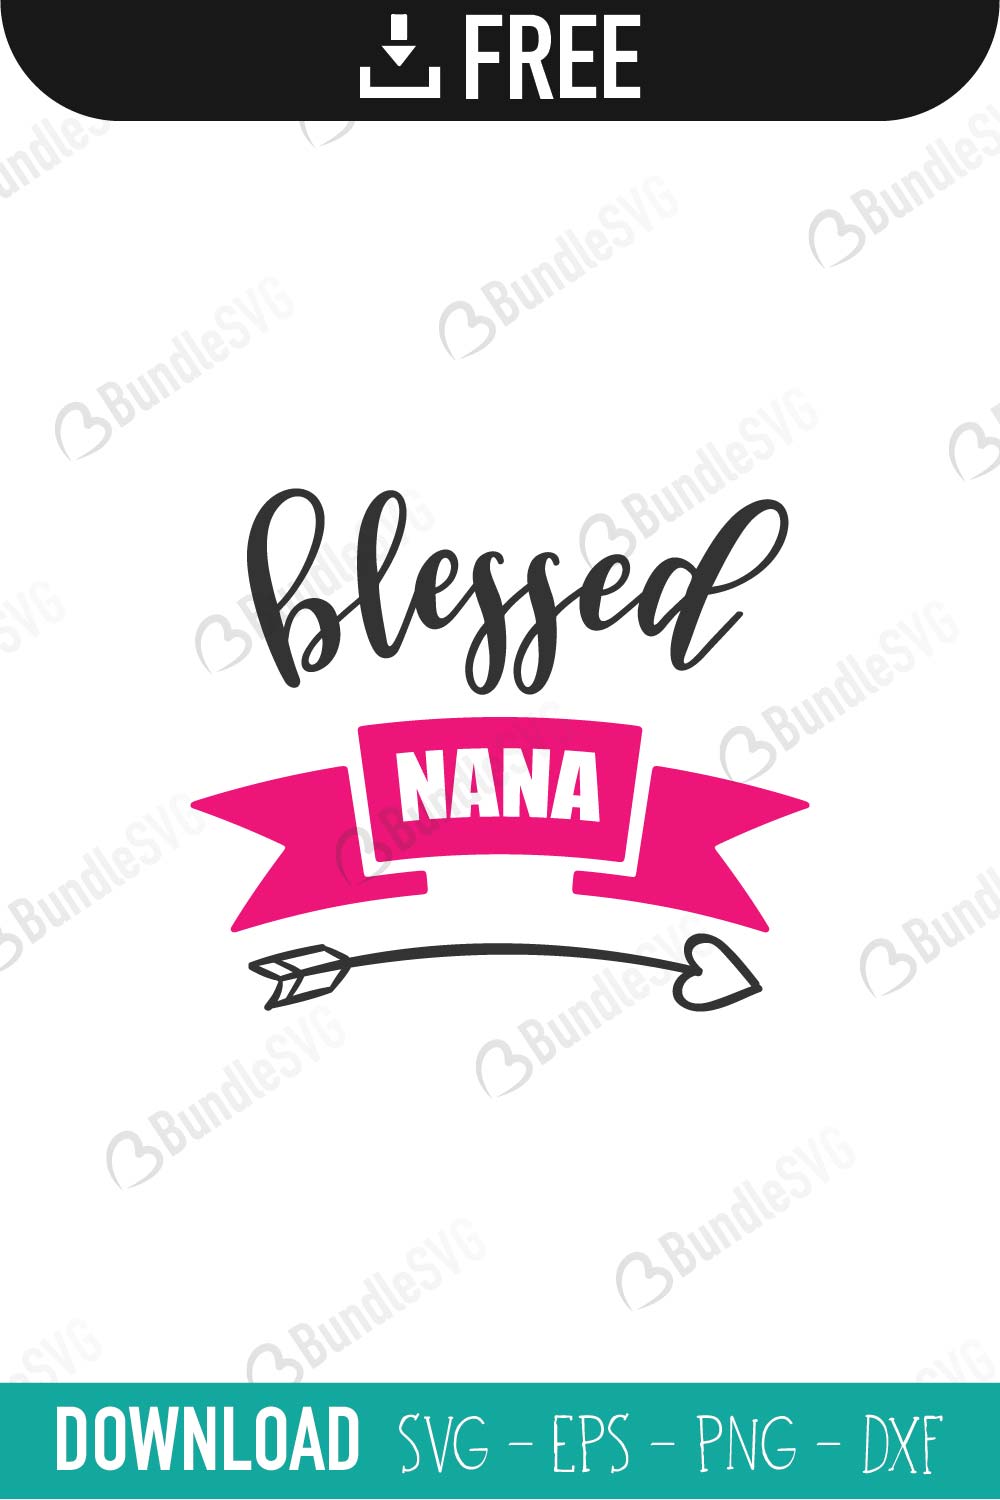 Blessed Nana SVG Cut Files Free Download | BundleSVG